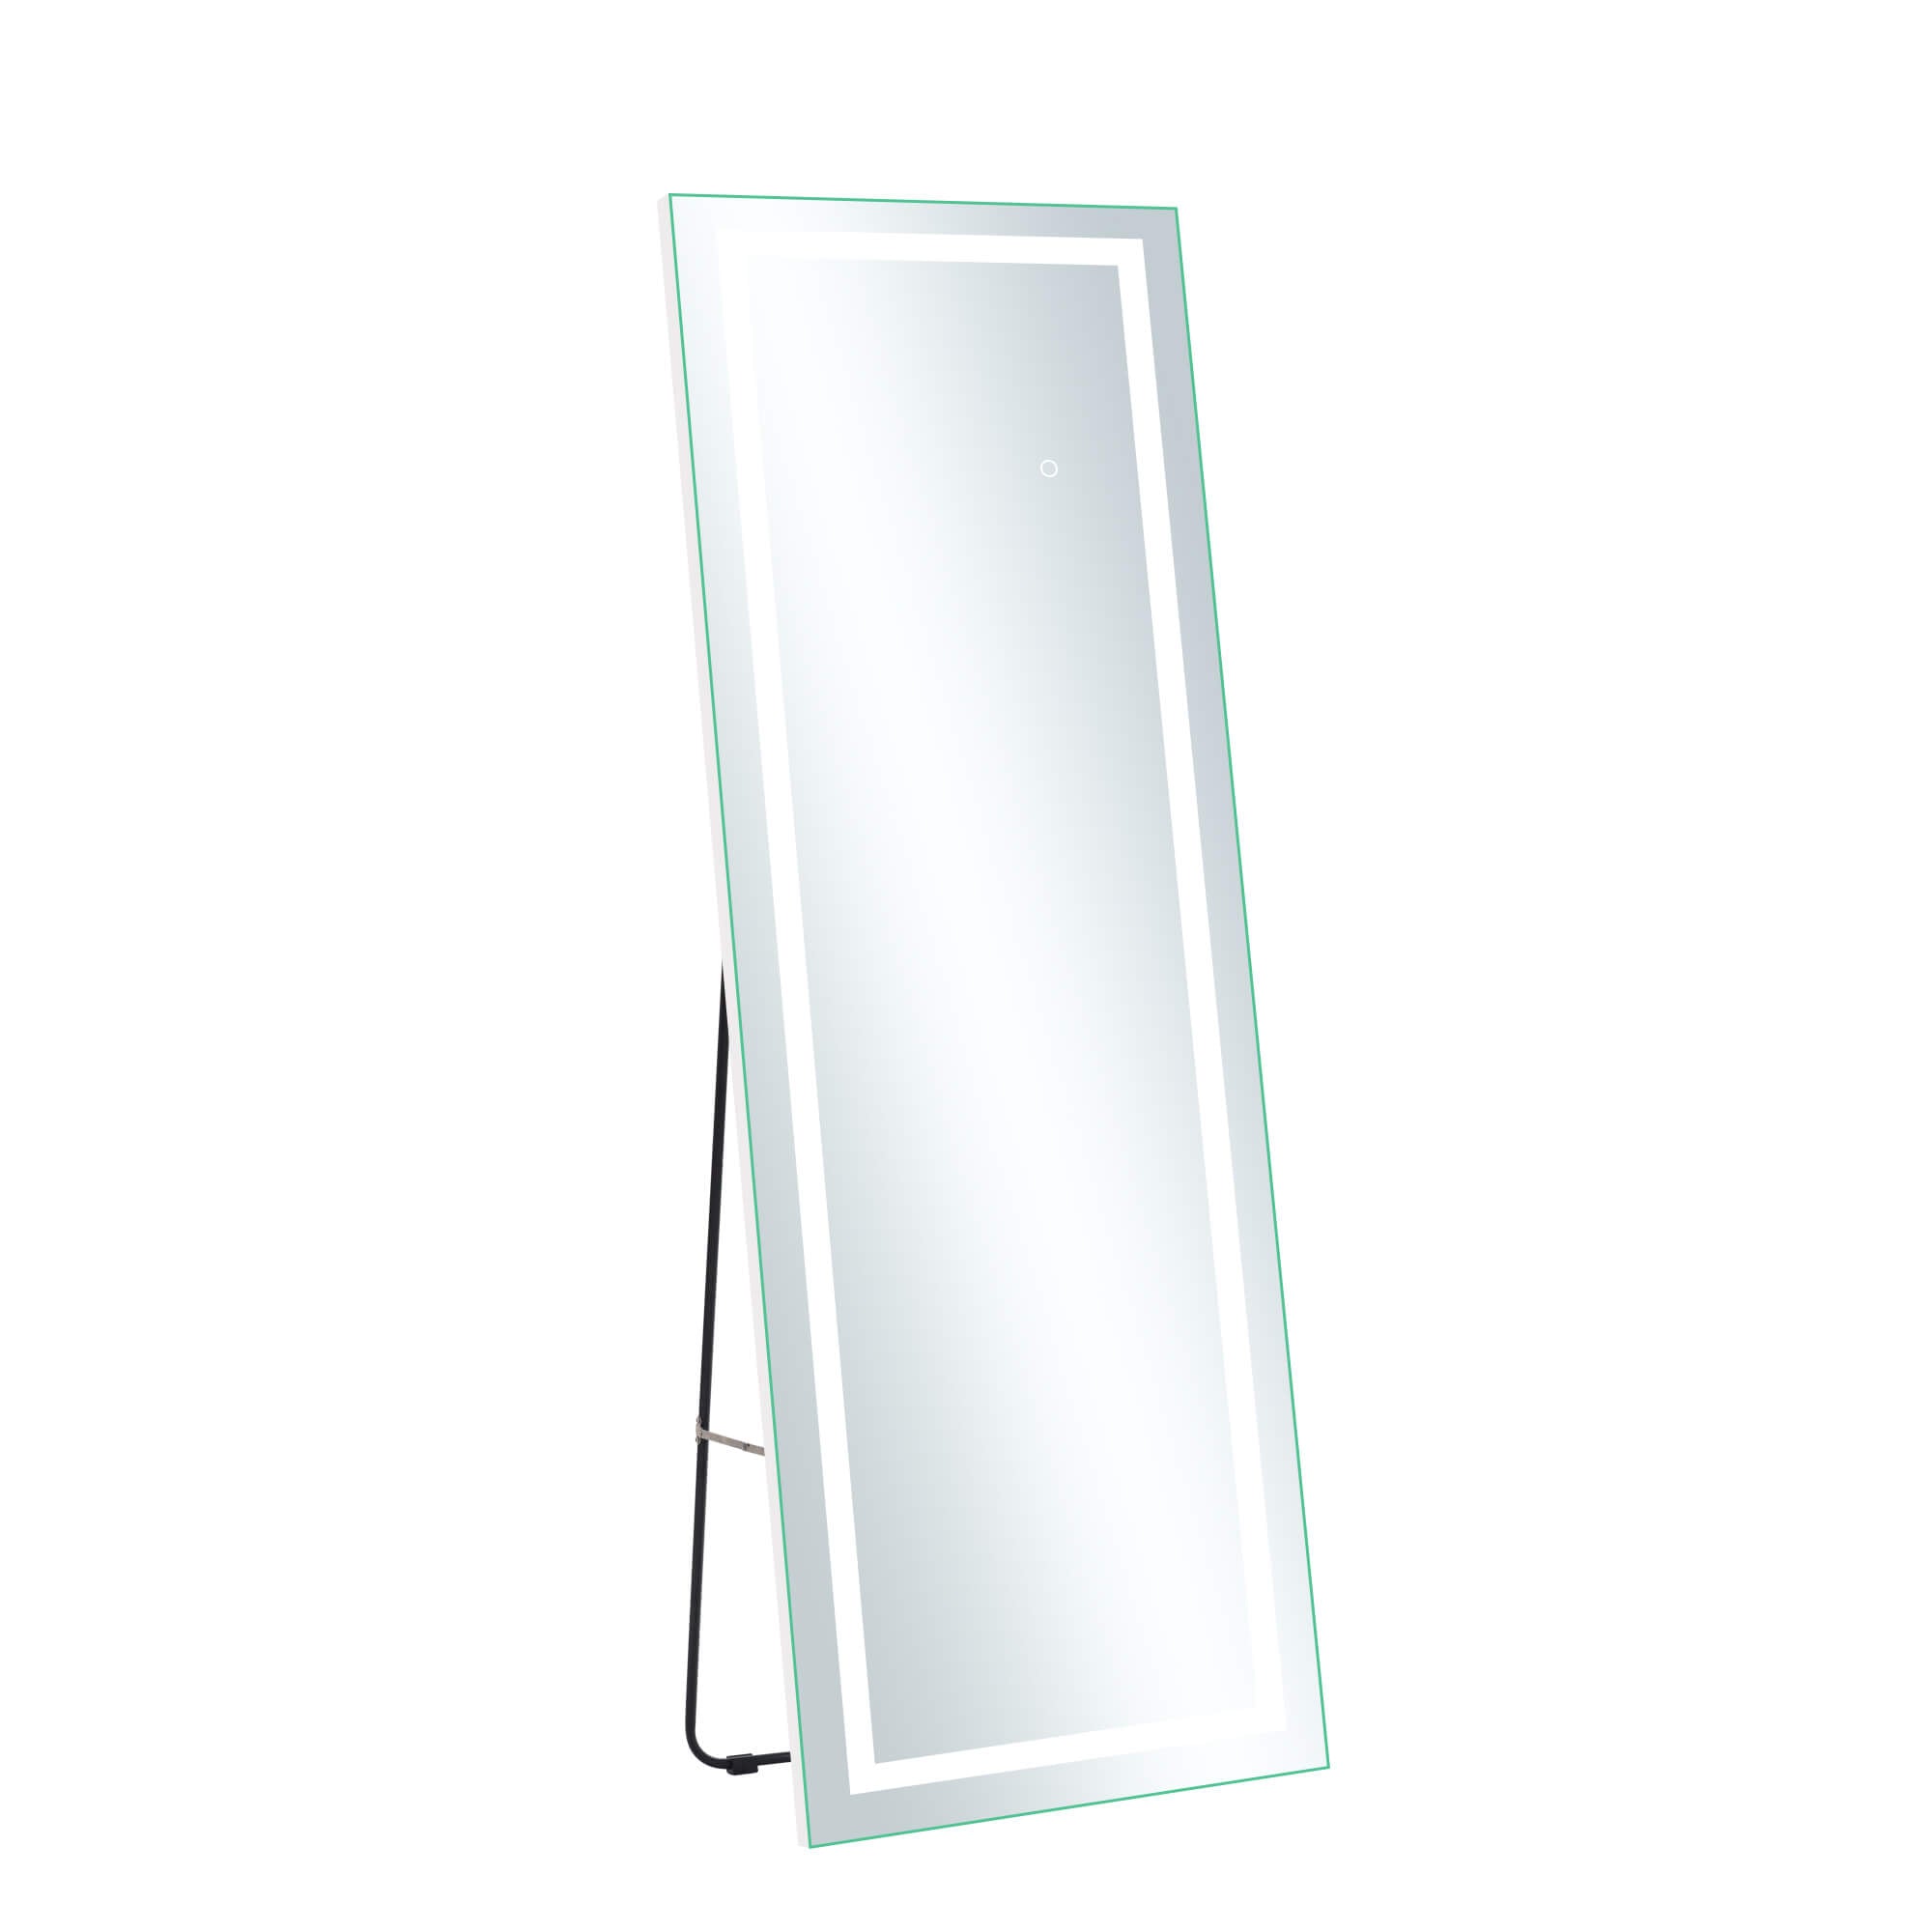 Gene-Bedroom Modern Full Length LED Mirror with stand